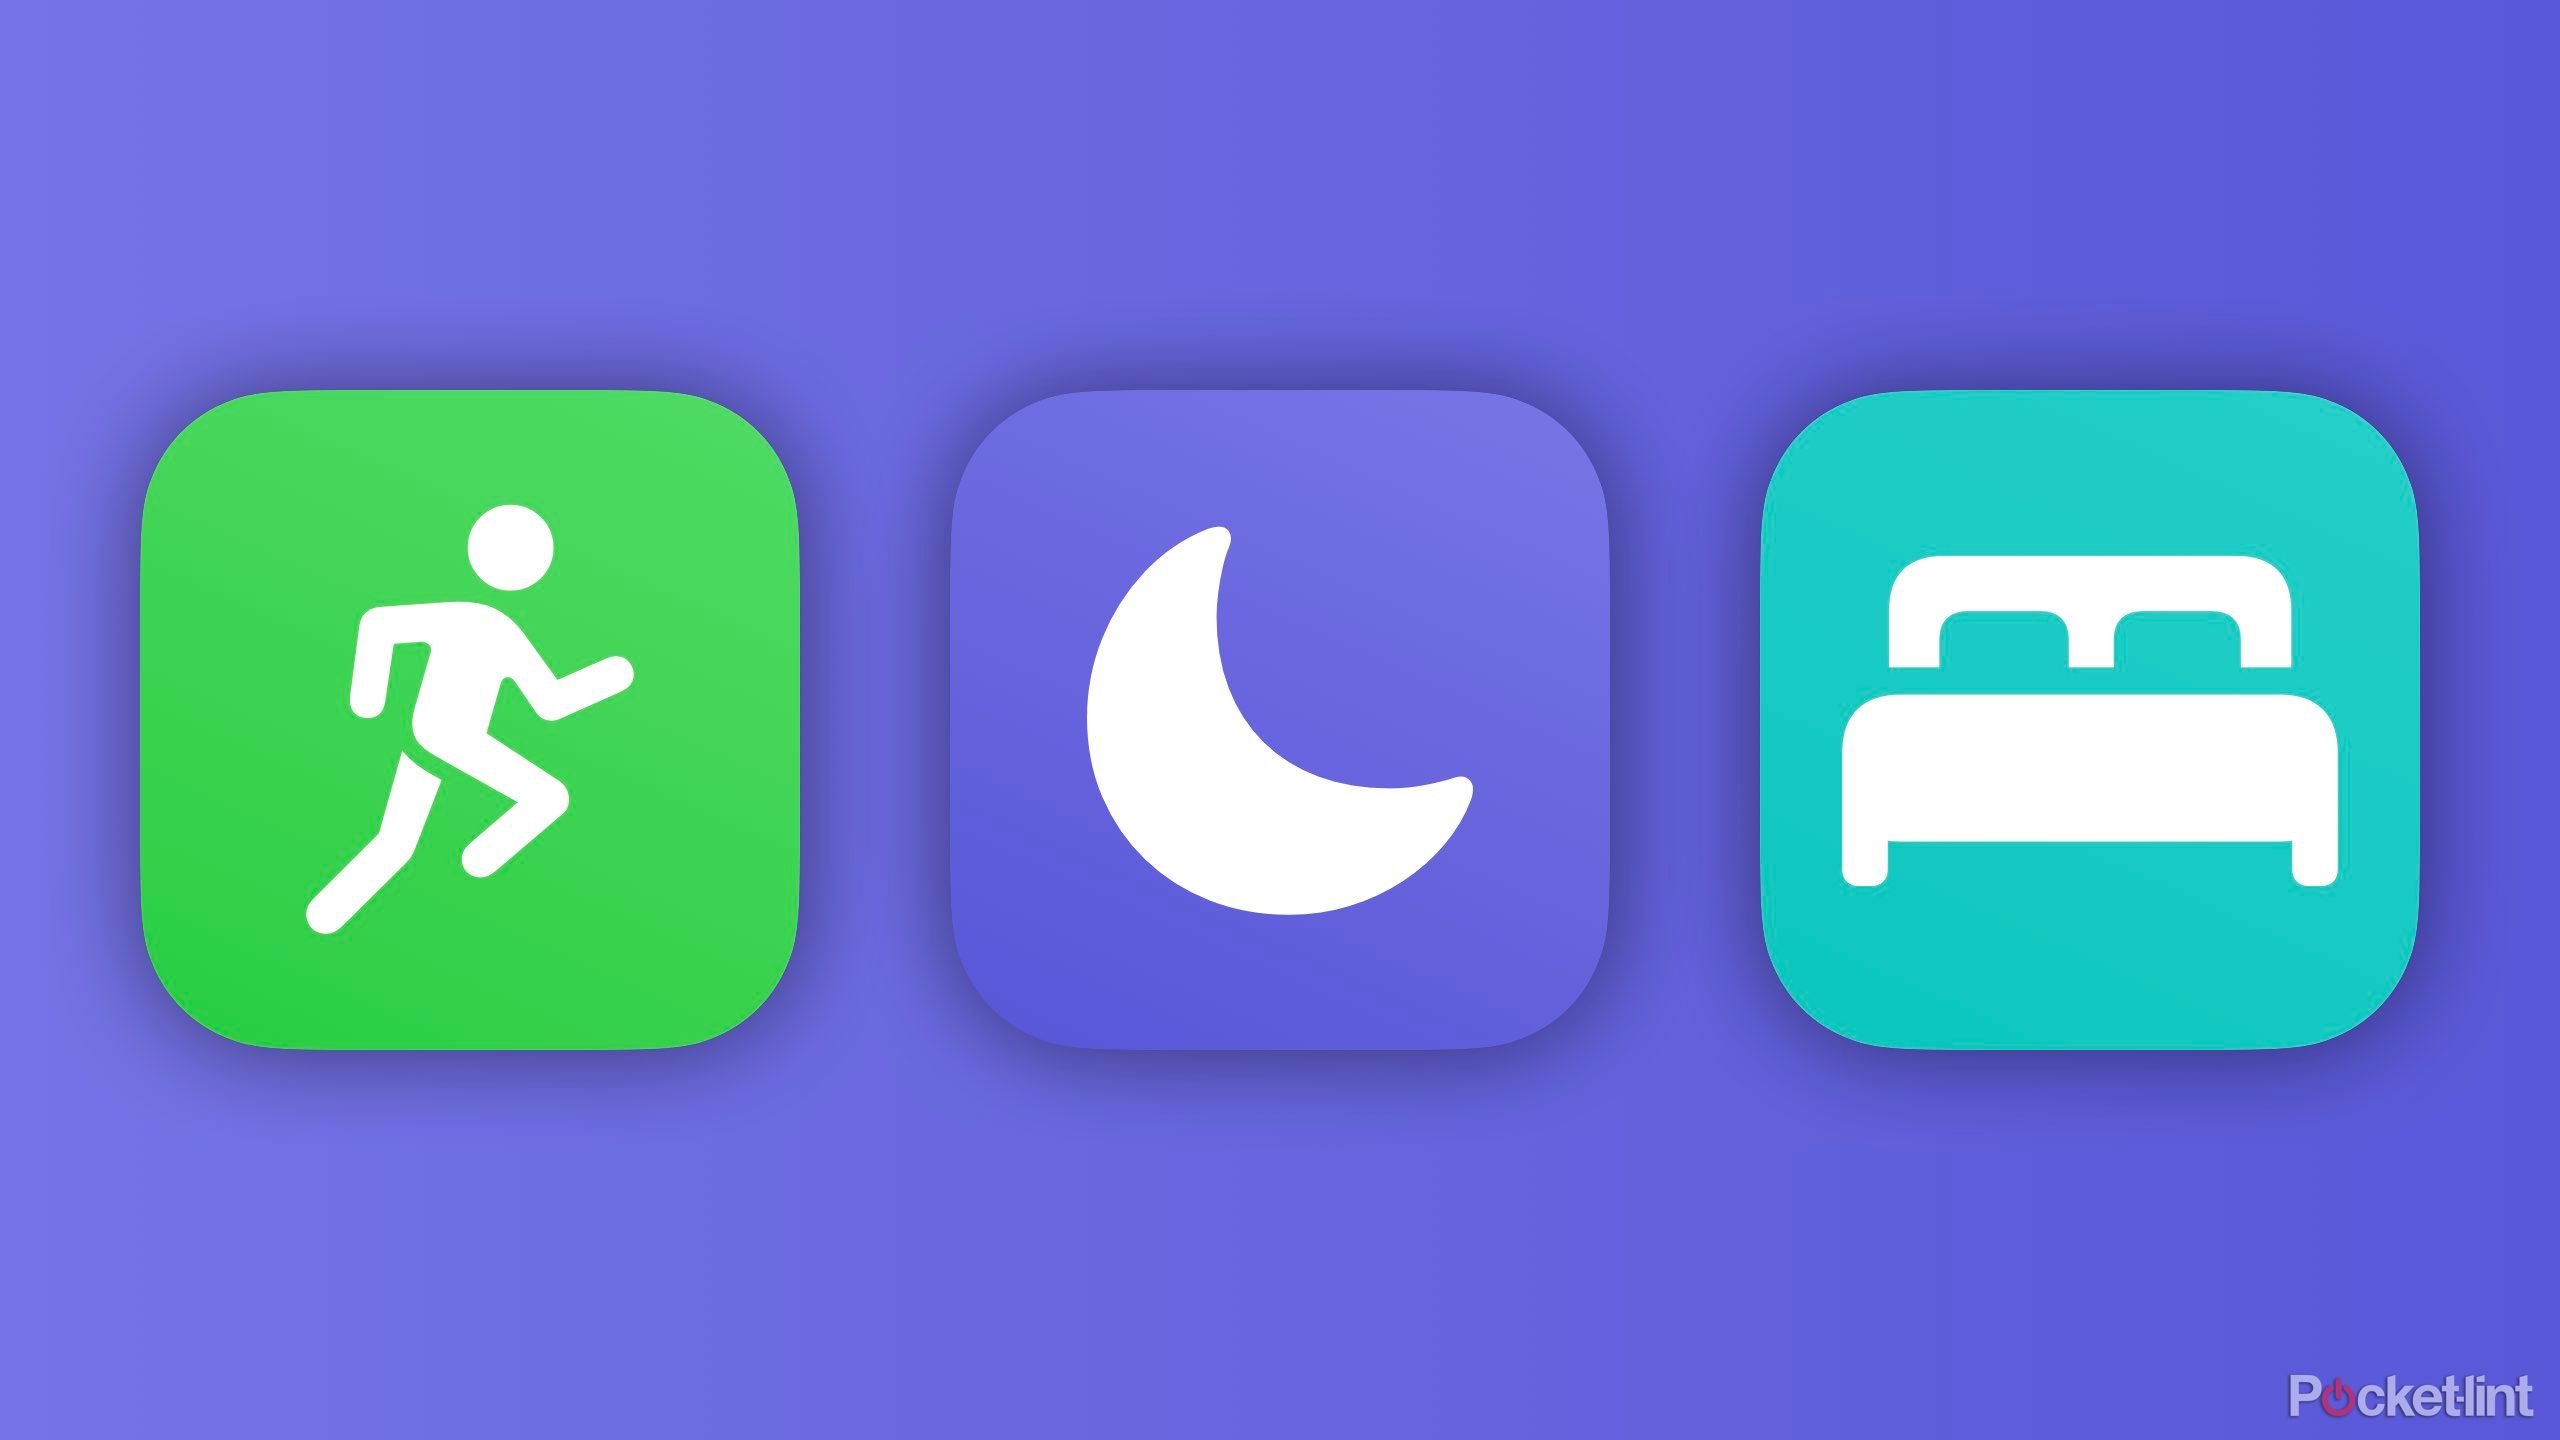 Three focus mode icons: Fitness, Do Not Disturb, and Sleep